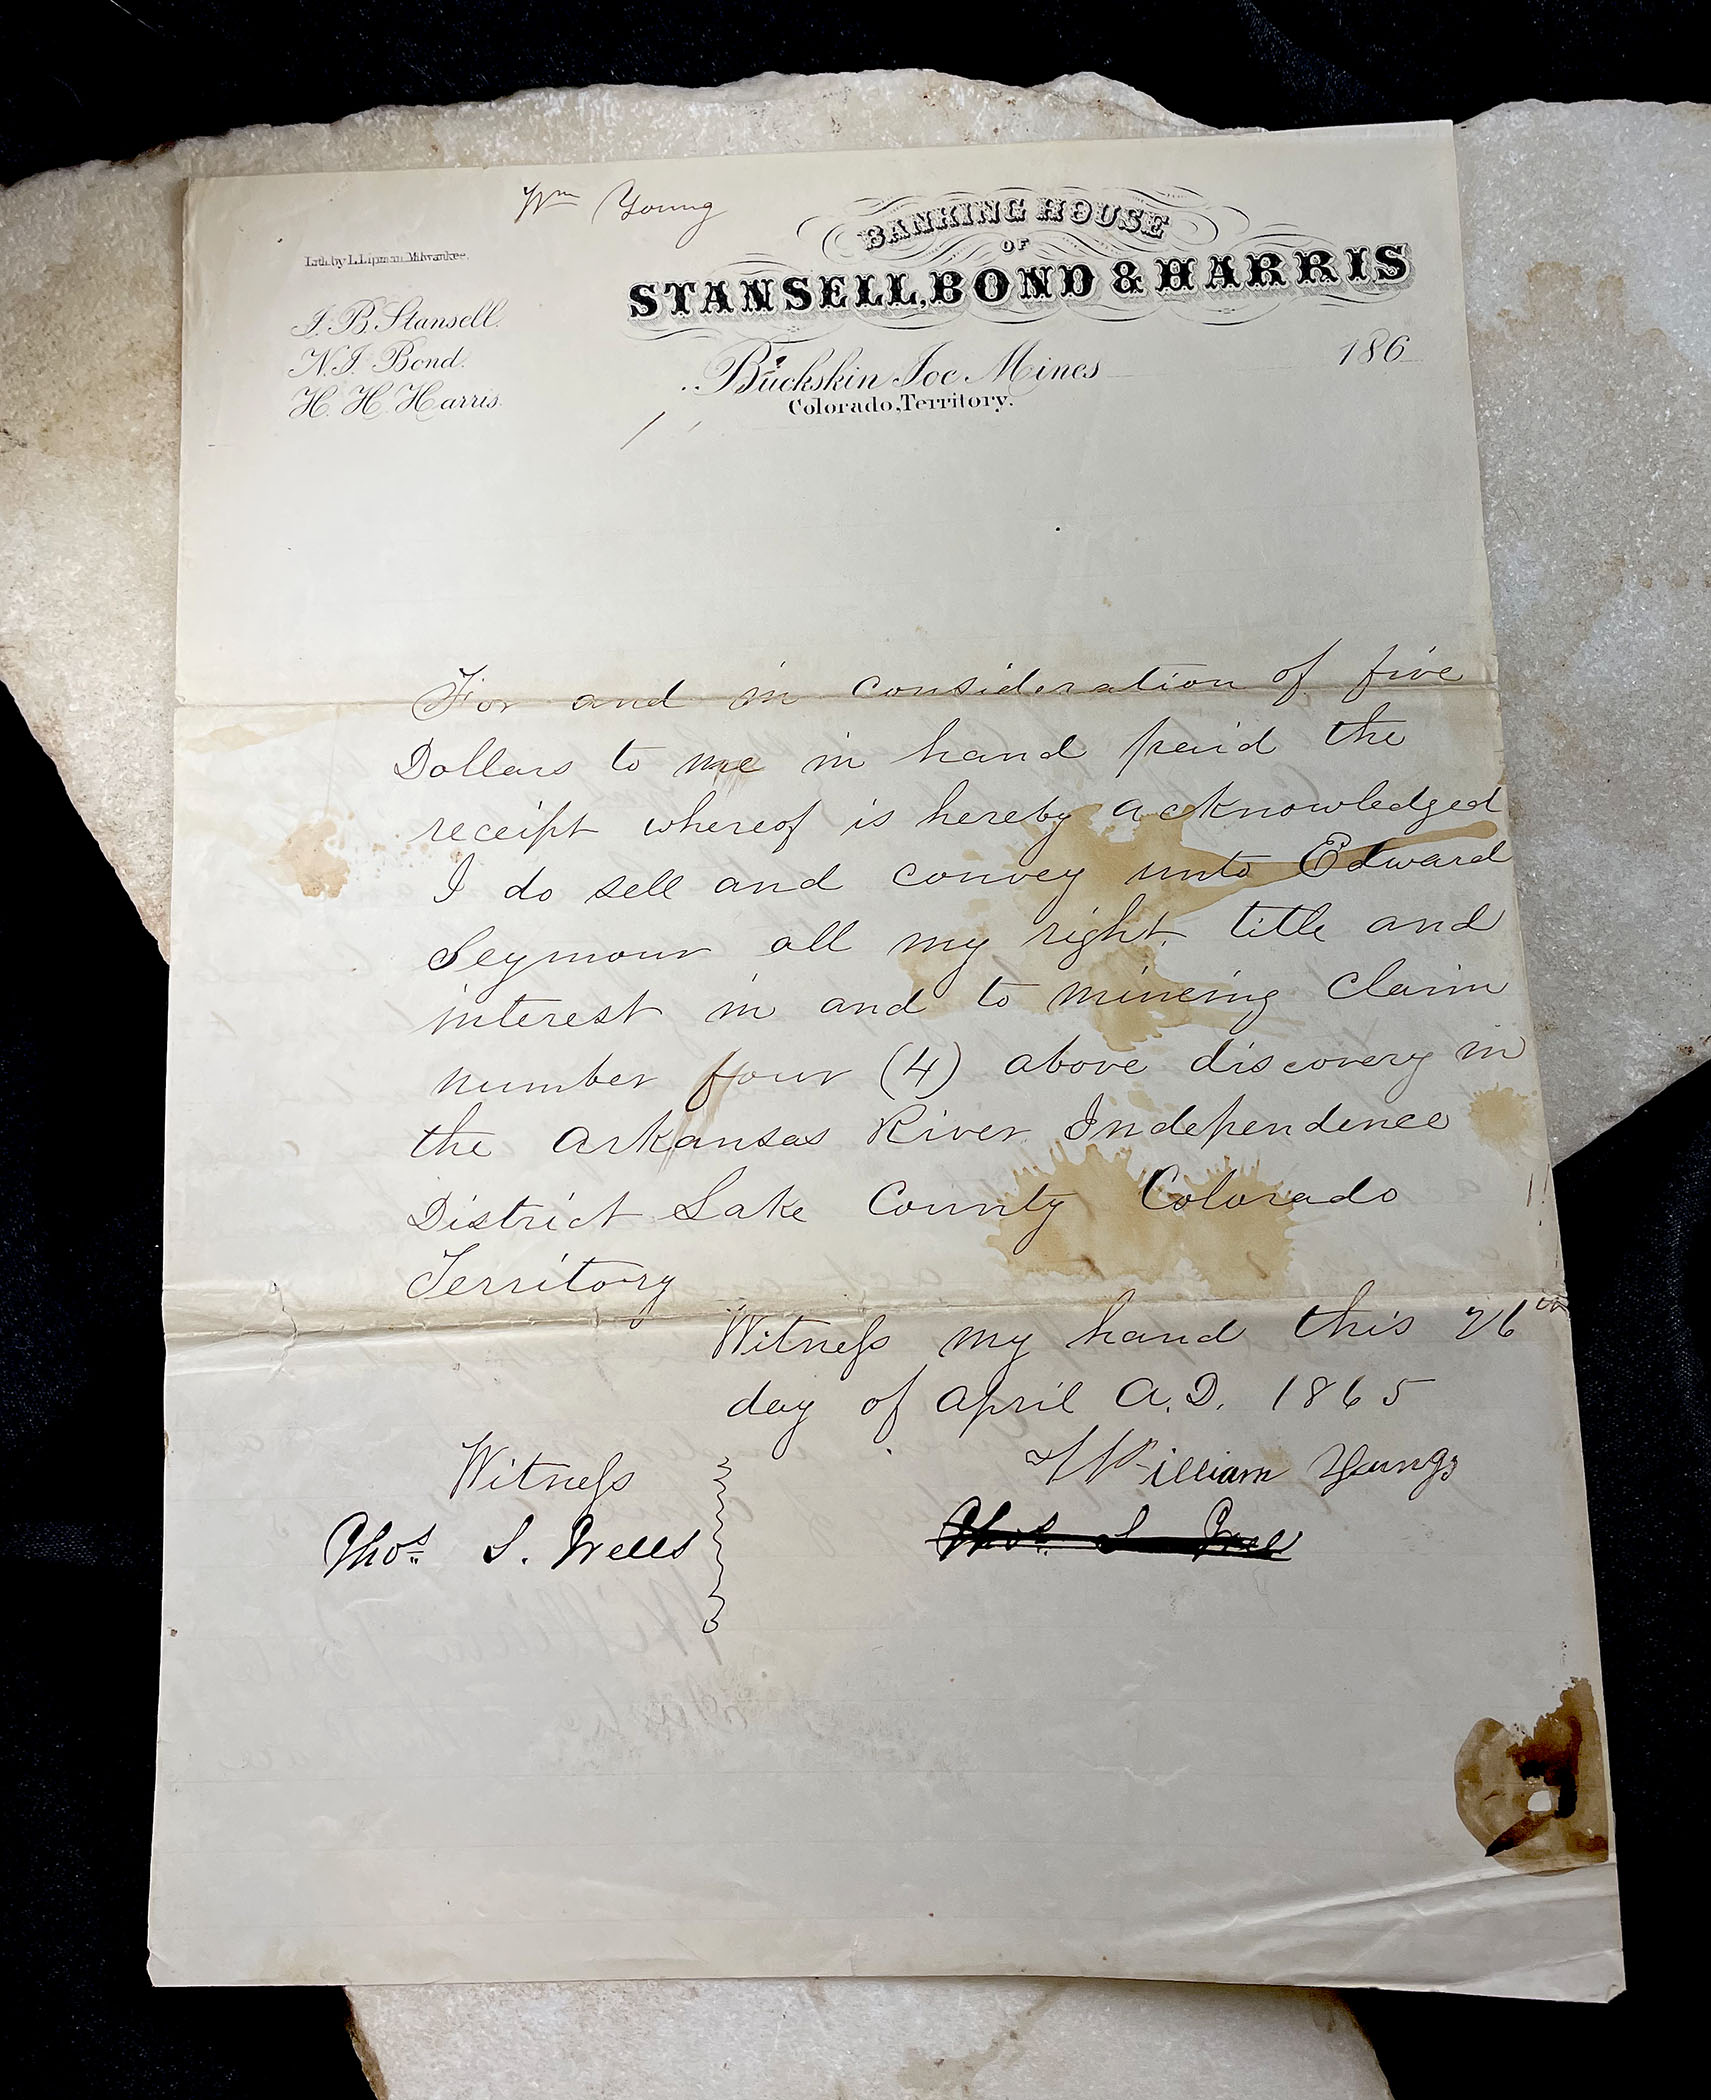 BUCKSKIN JOE, MINES, COLORADO TERRITORY, BANKING HOUSE OF STANSELL, BOND & HARRIS Letterhead 1865